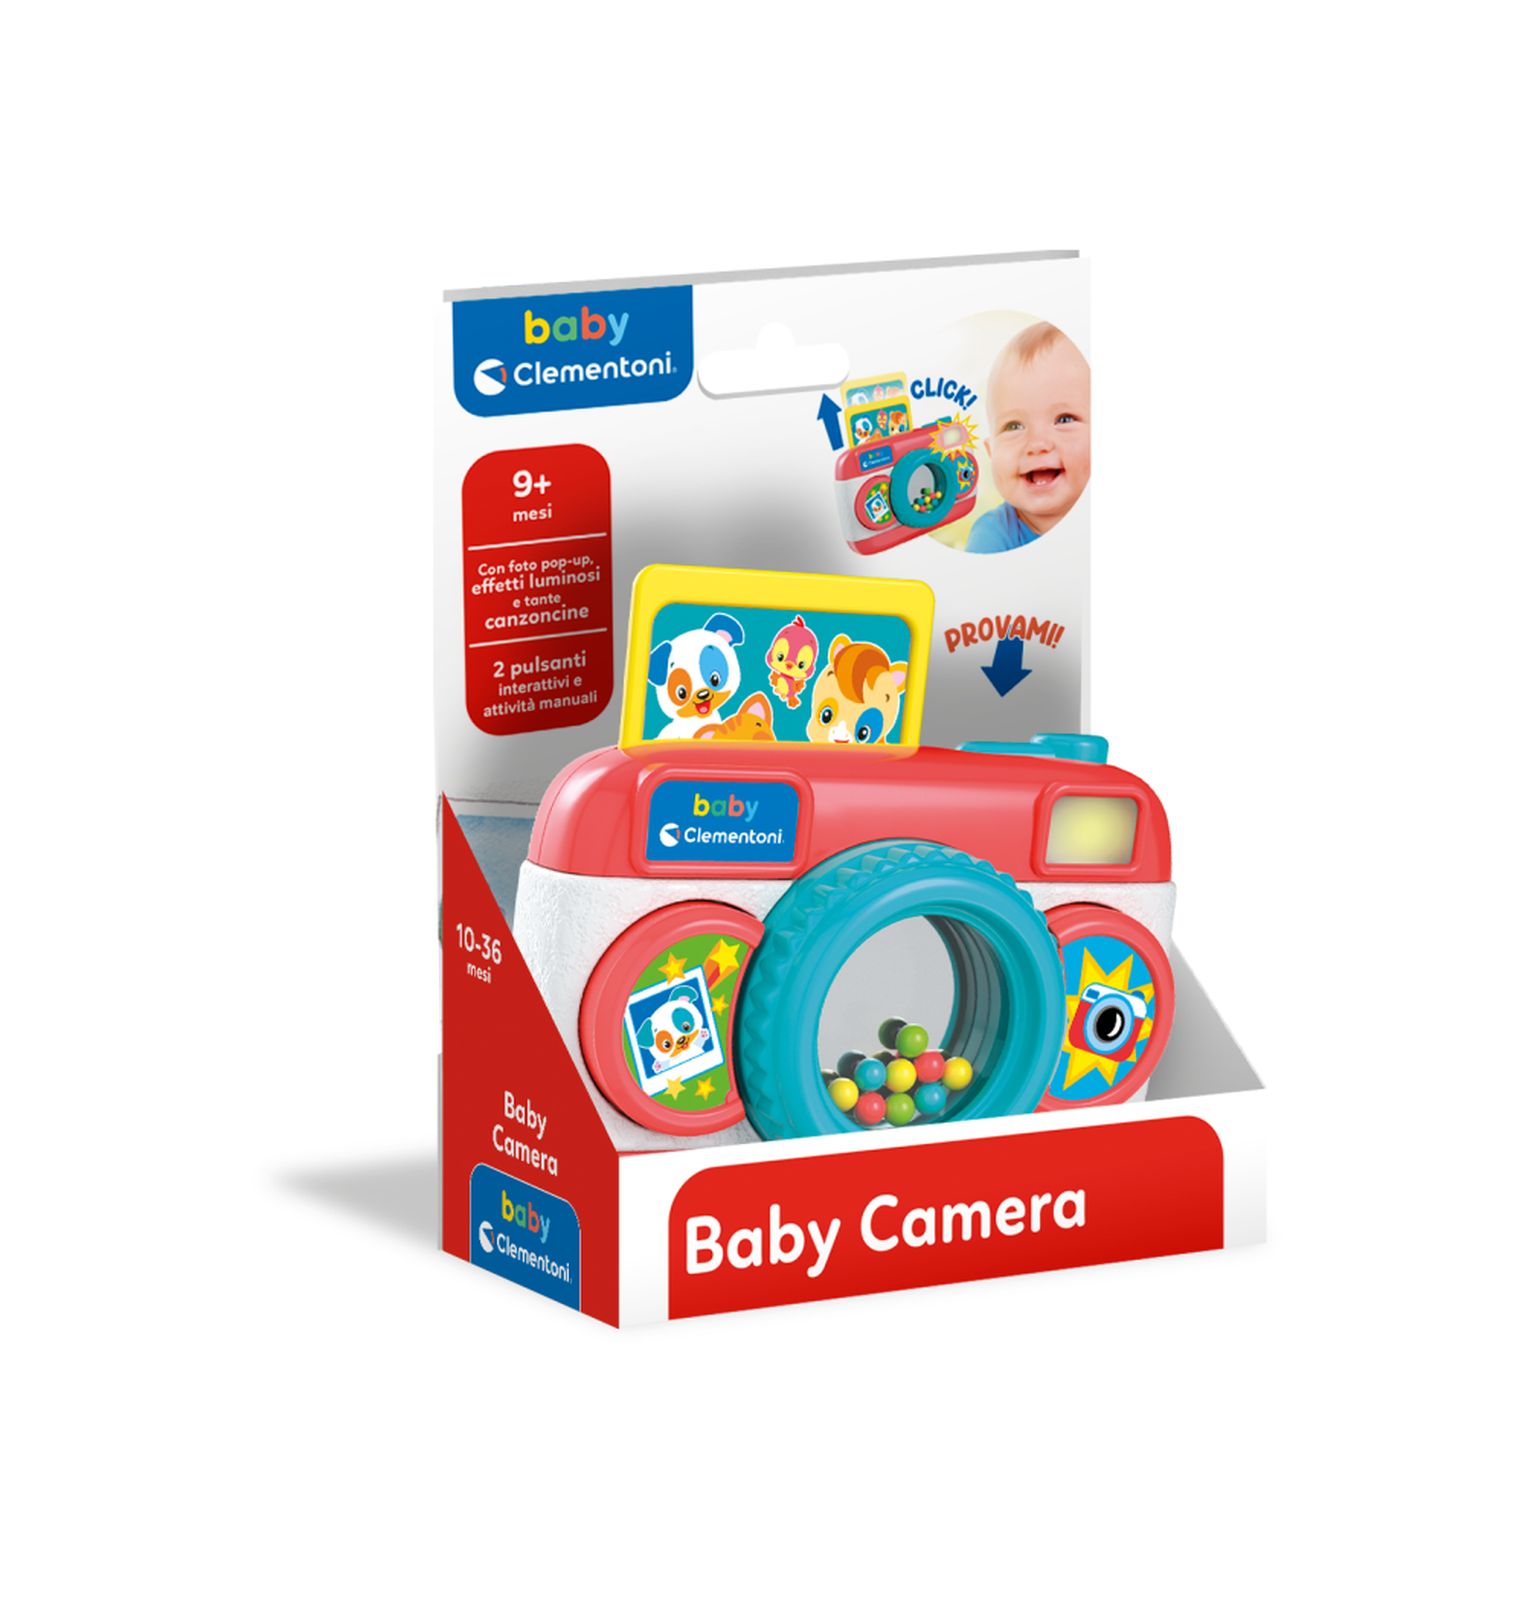 Clementoni - 17440 - baby camera - BABY CLEMENTONI